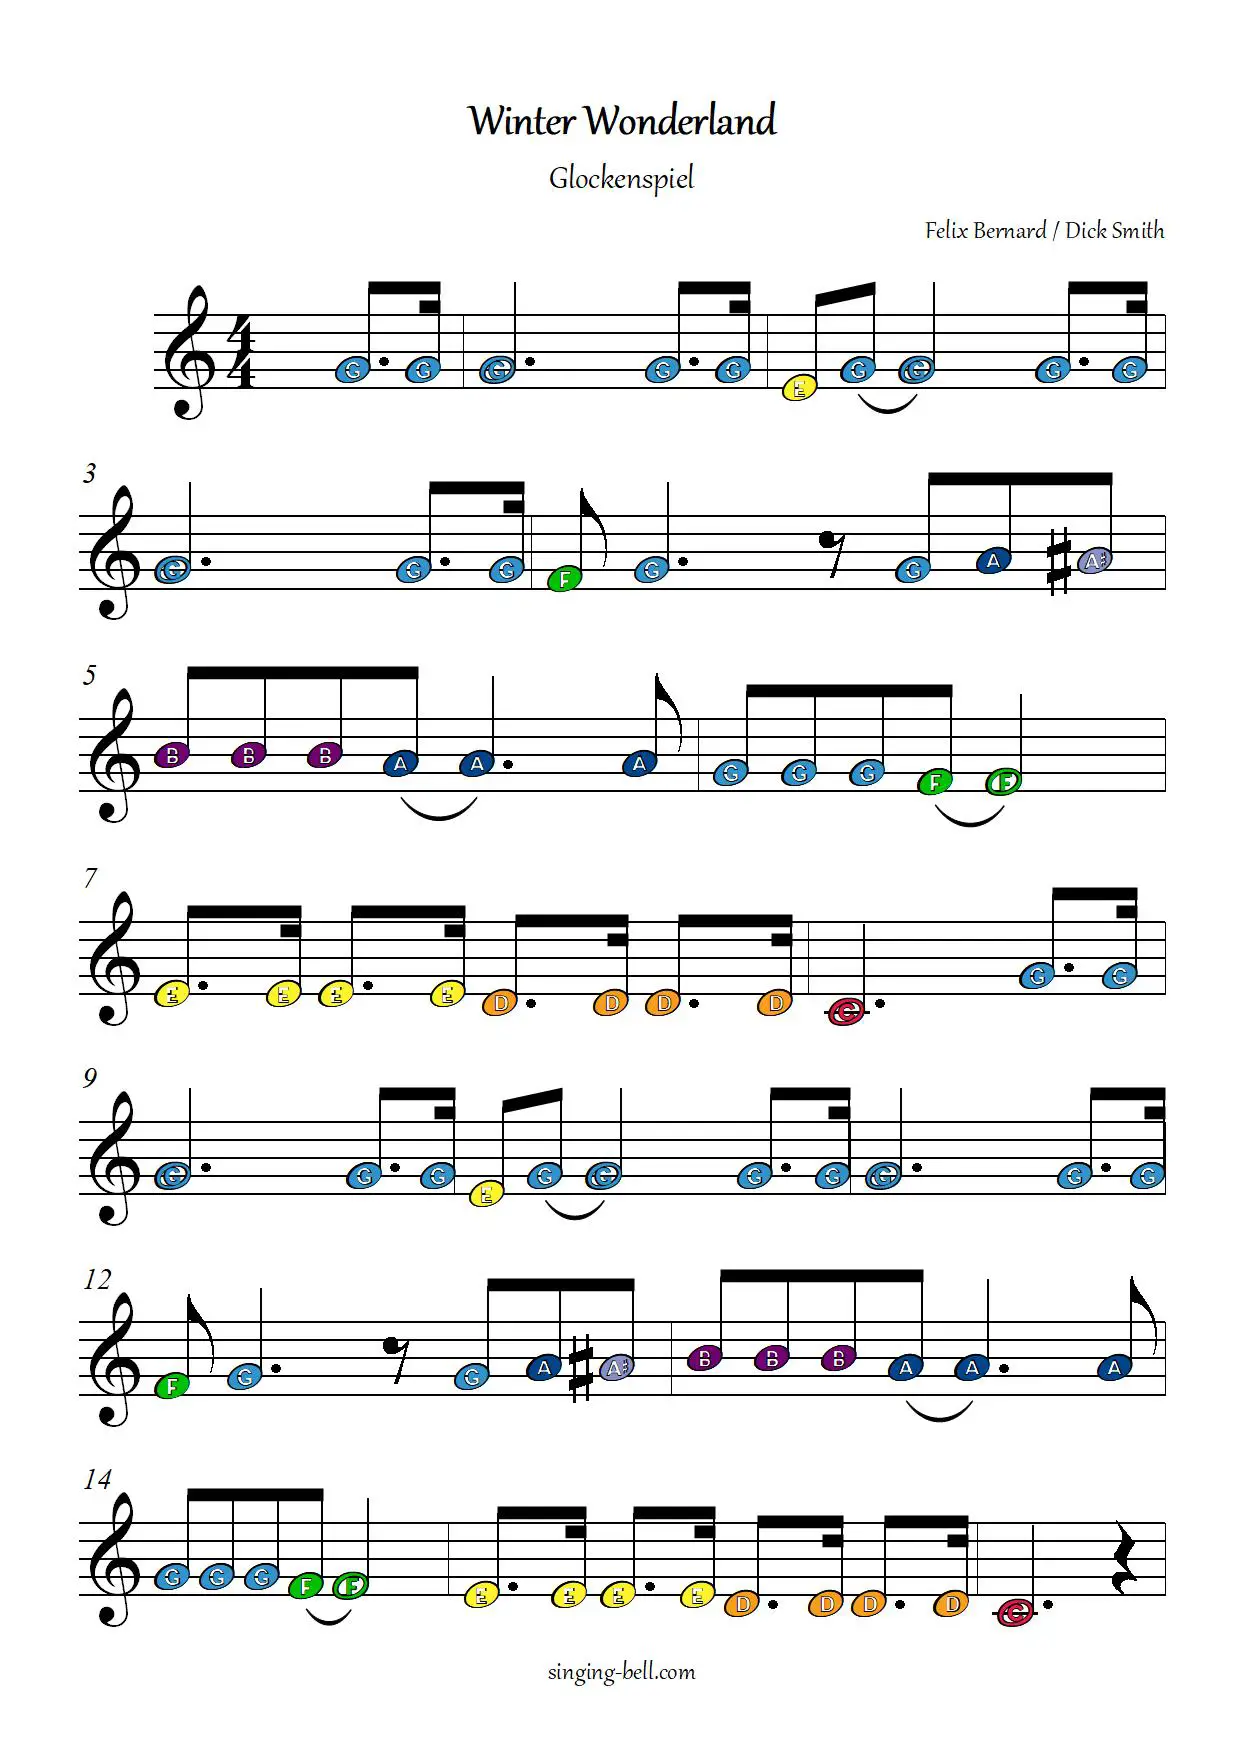 Winter Wonderland free xylophone glockenspiel sheet music color notes chart pdf p.1